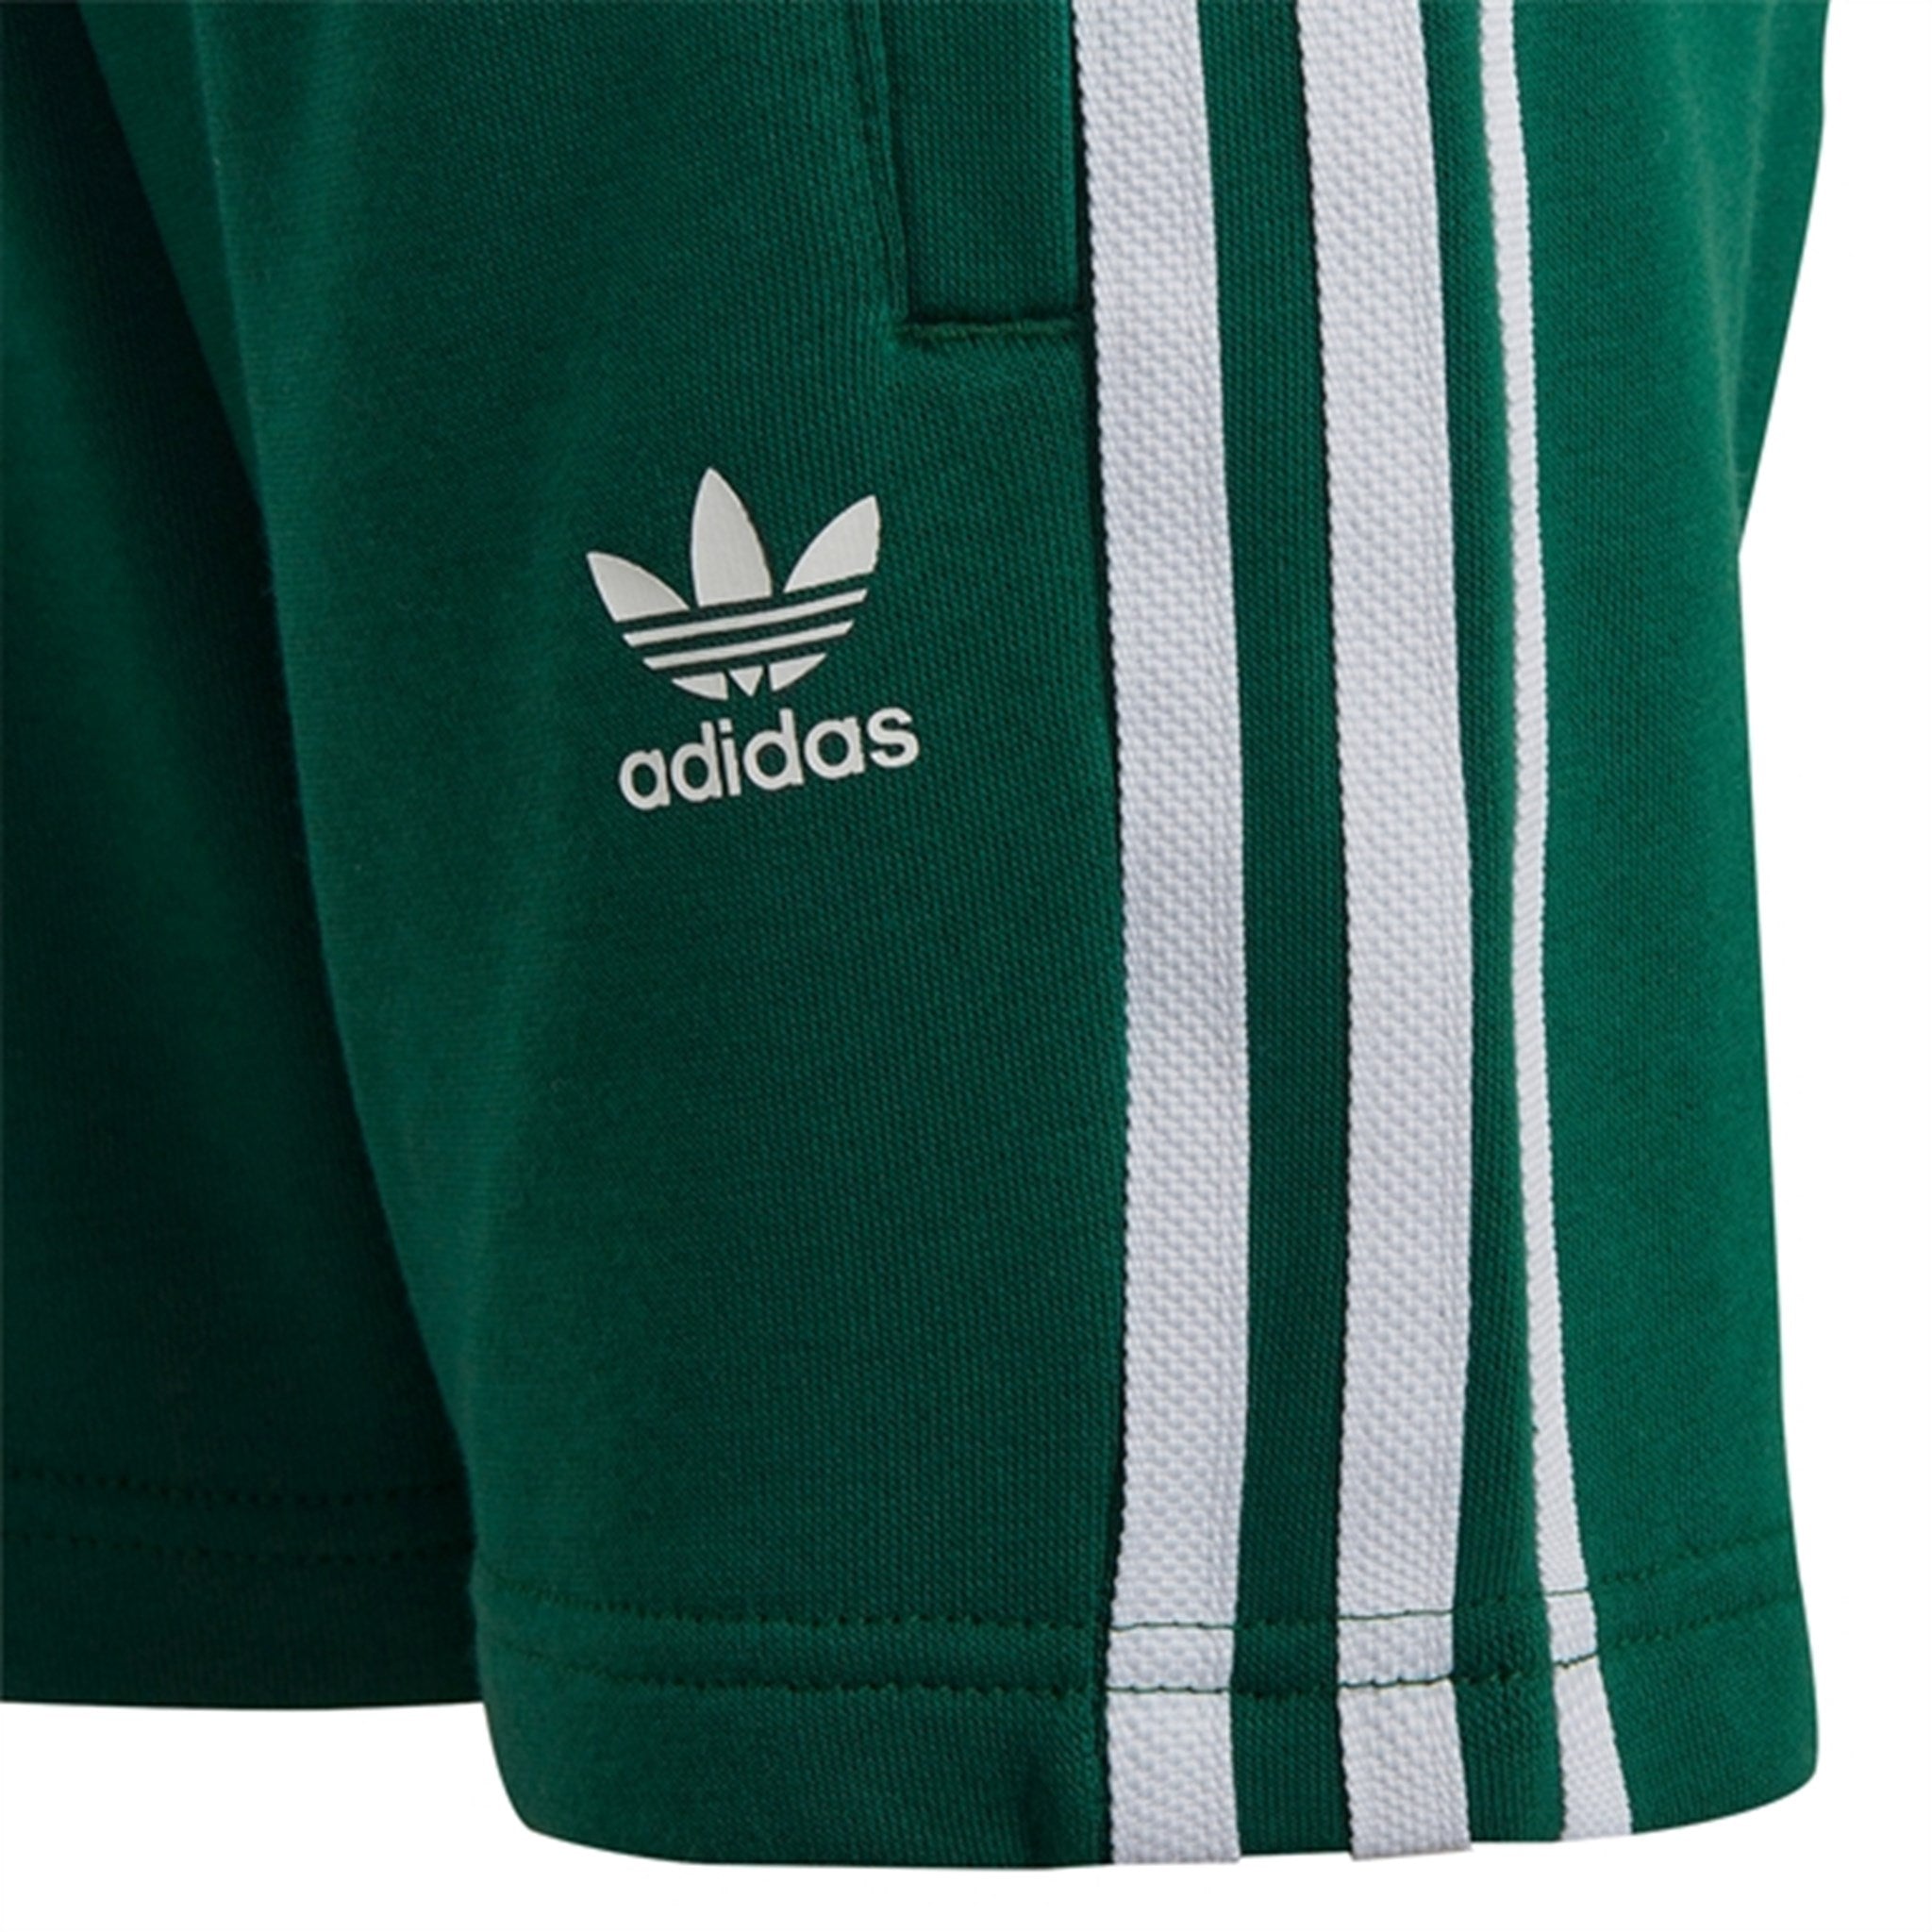 adidas Originals Dark Green Shorts Tee Set 4